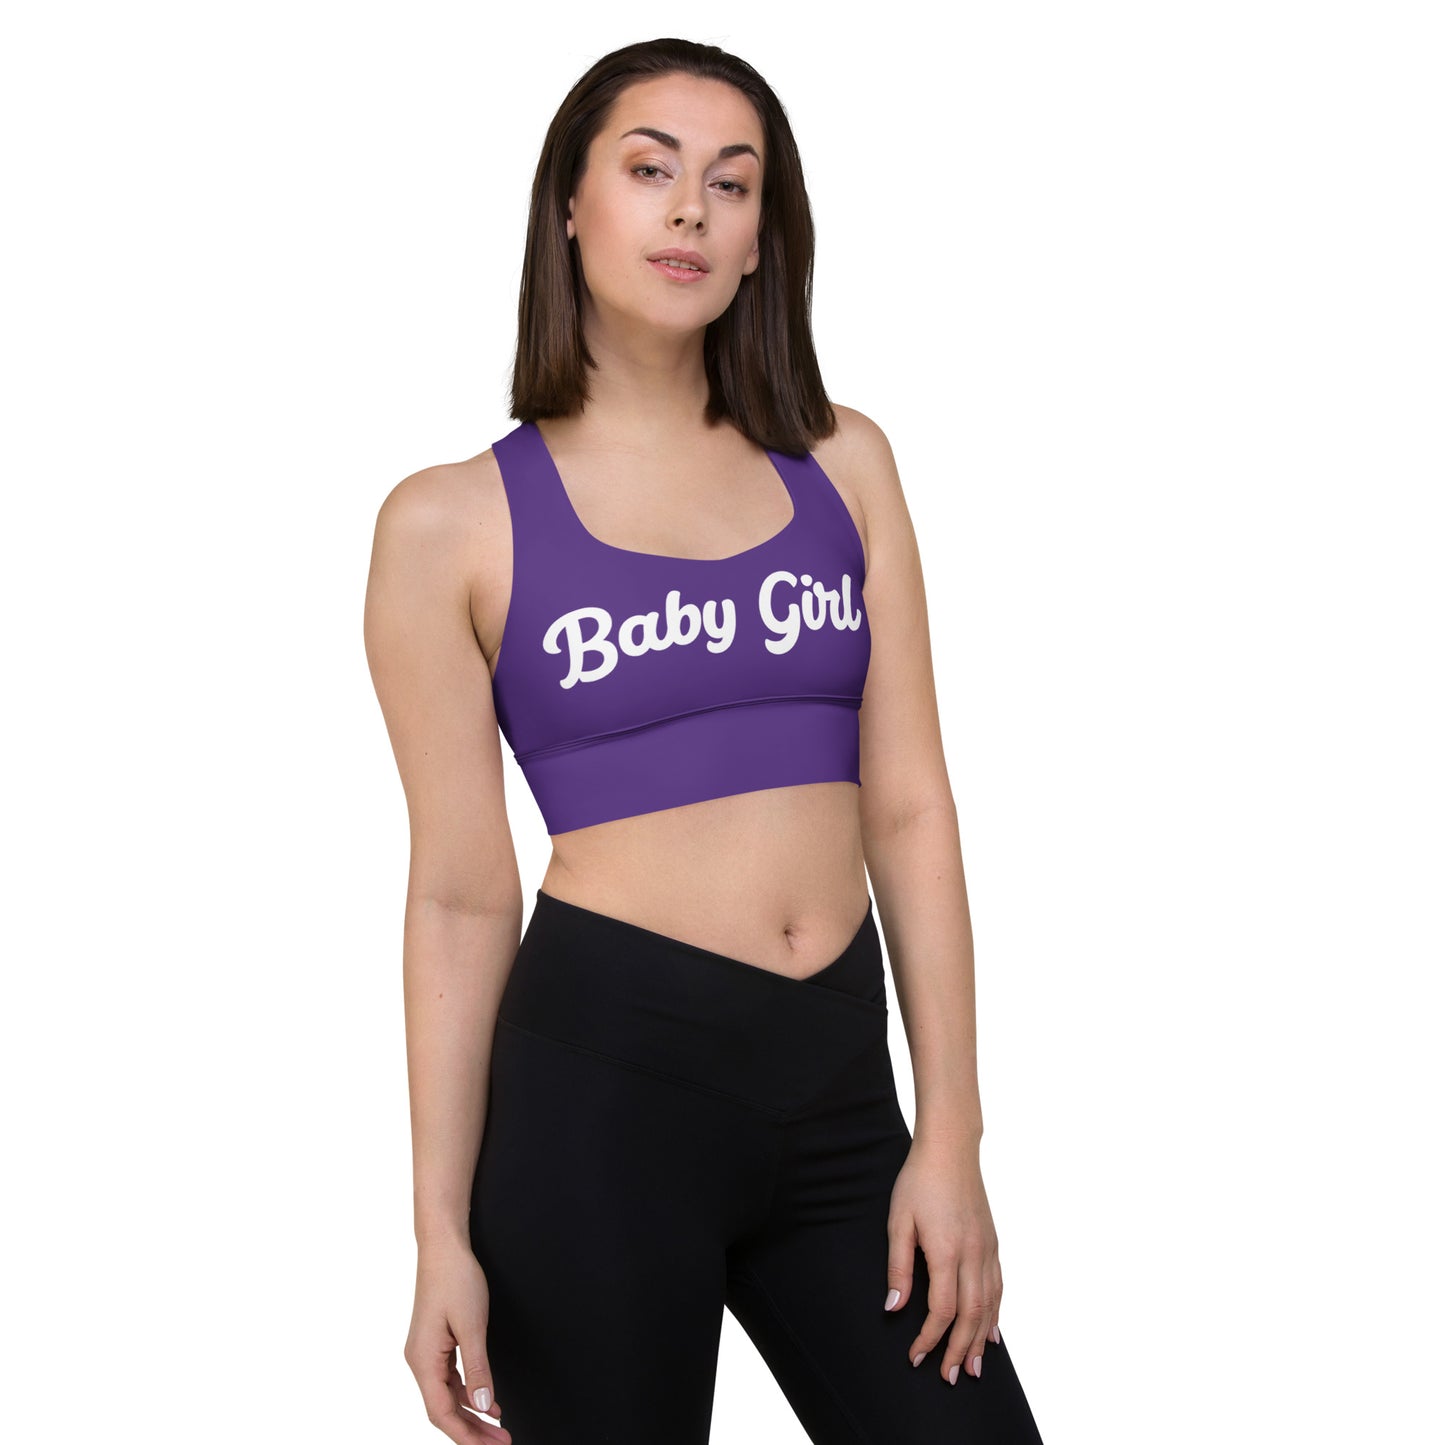 Baby Girl-Sports Bra(Purple& Black)